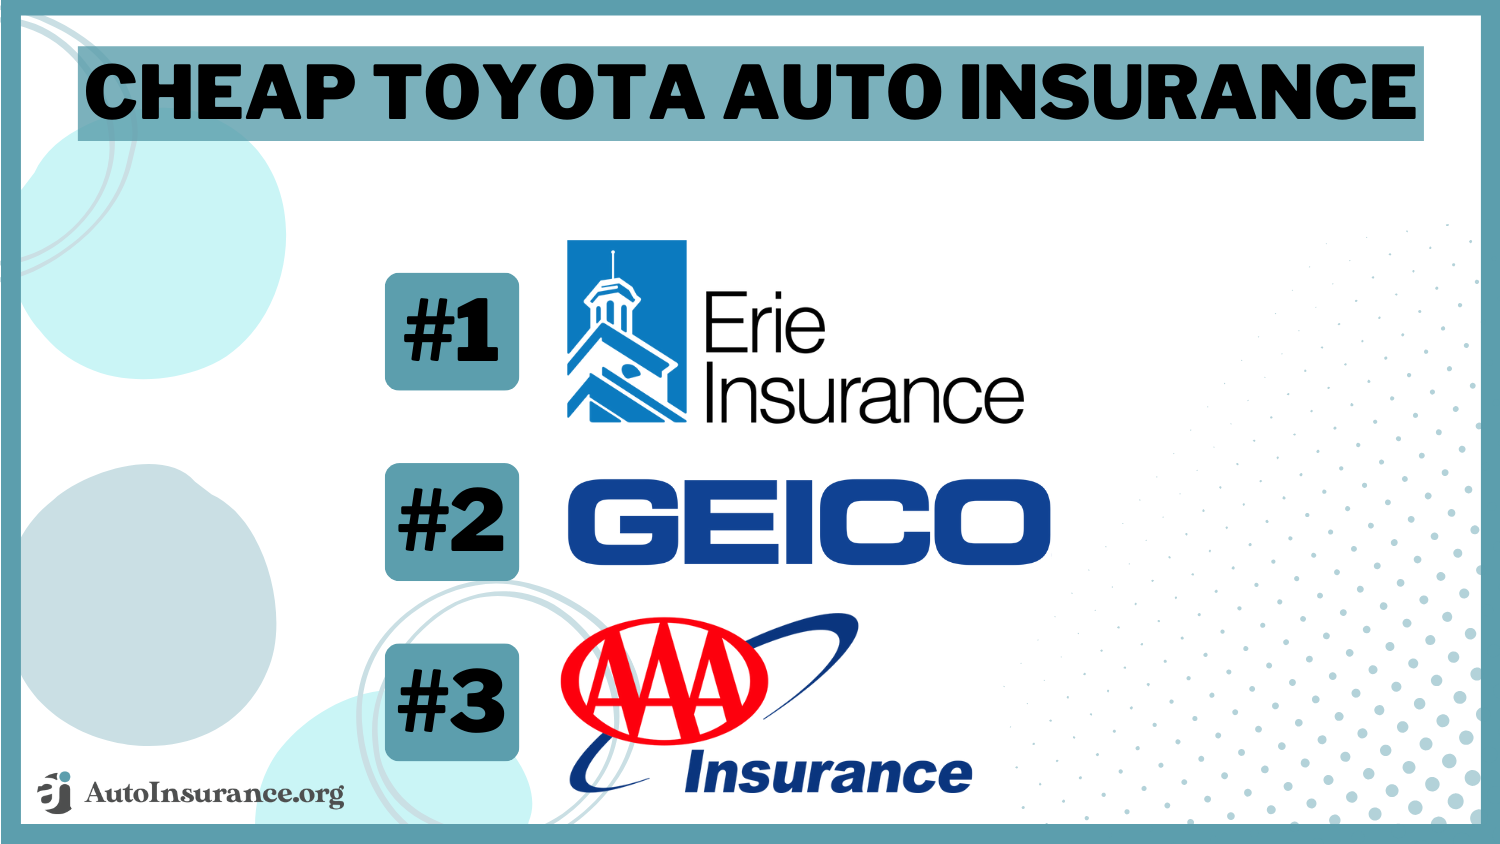 Cheap Toyota Auto Insurance: Erie, Geico, AAA